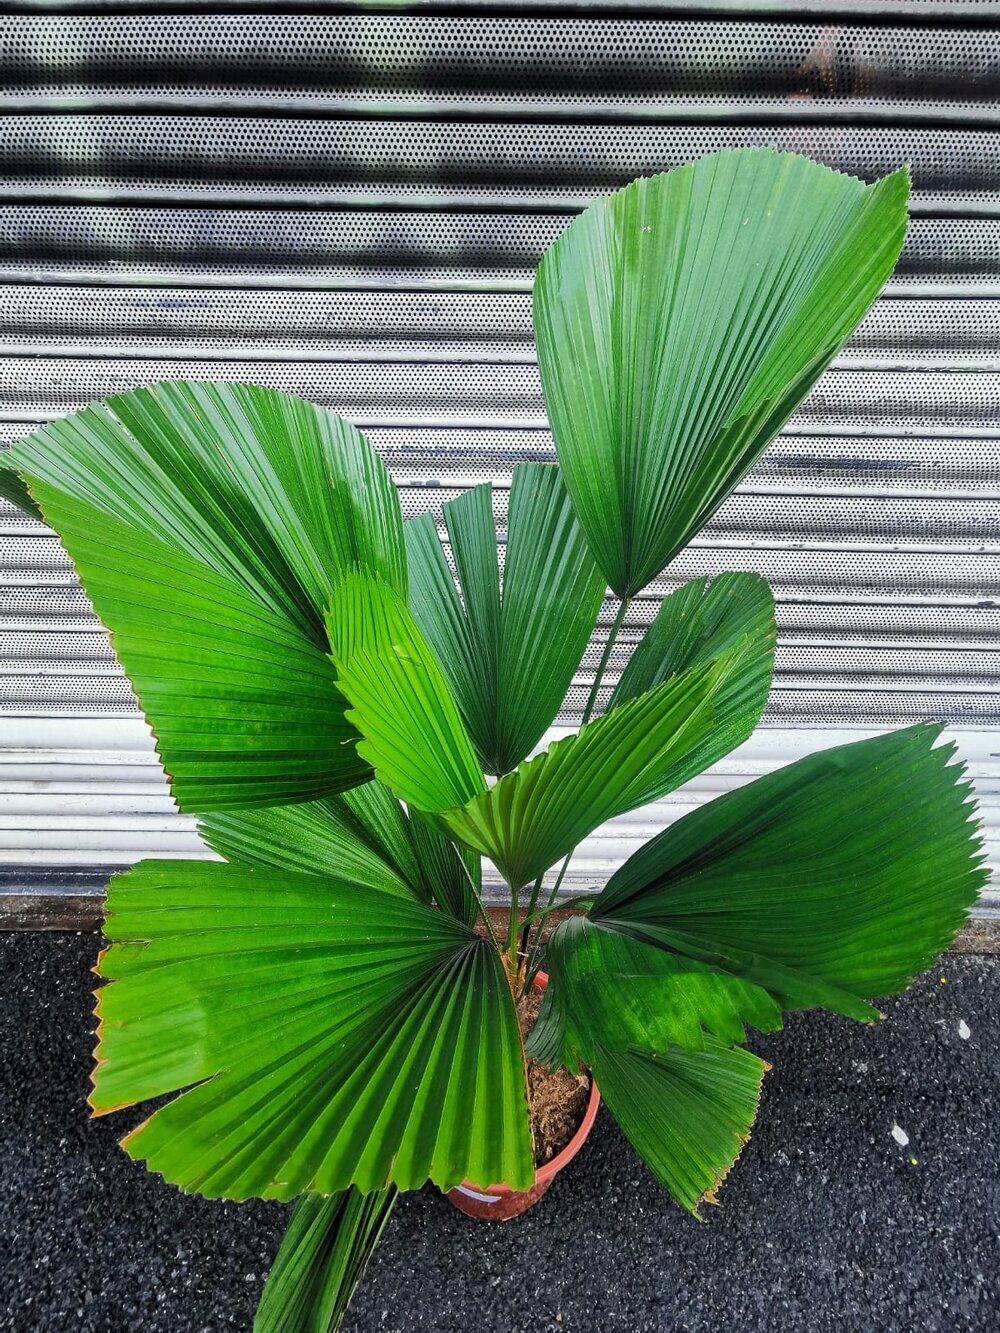 Store, grønne blade af Licuala Palme (Licuala grandis)